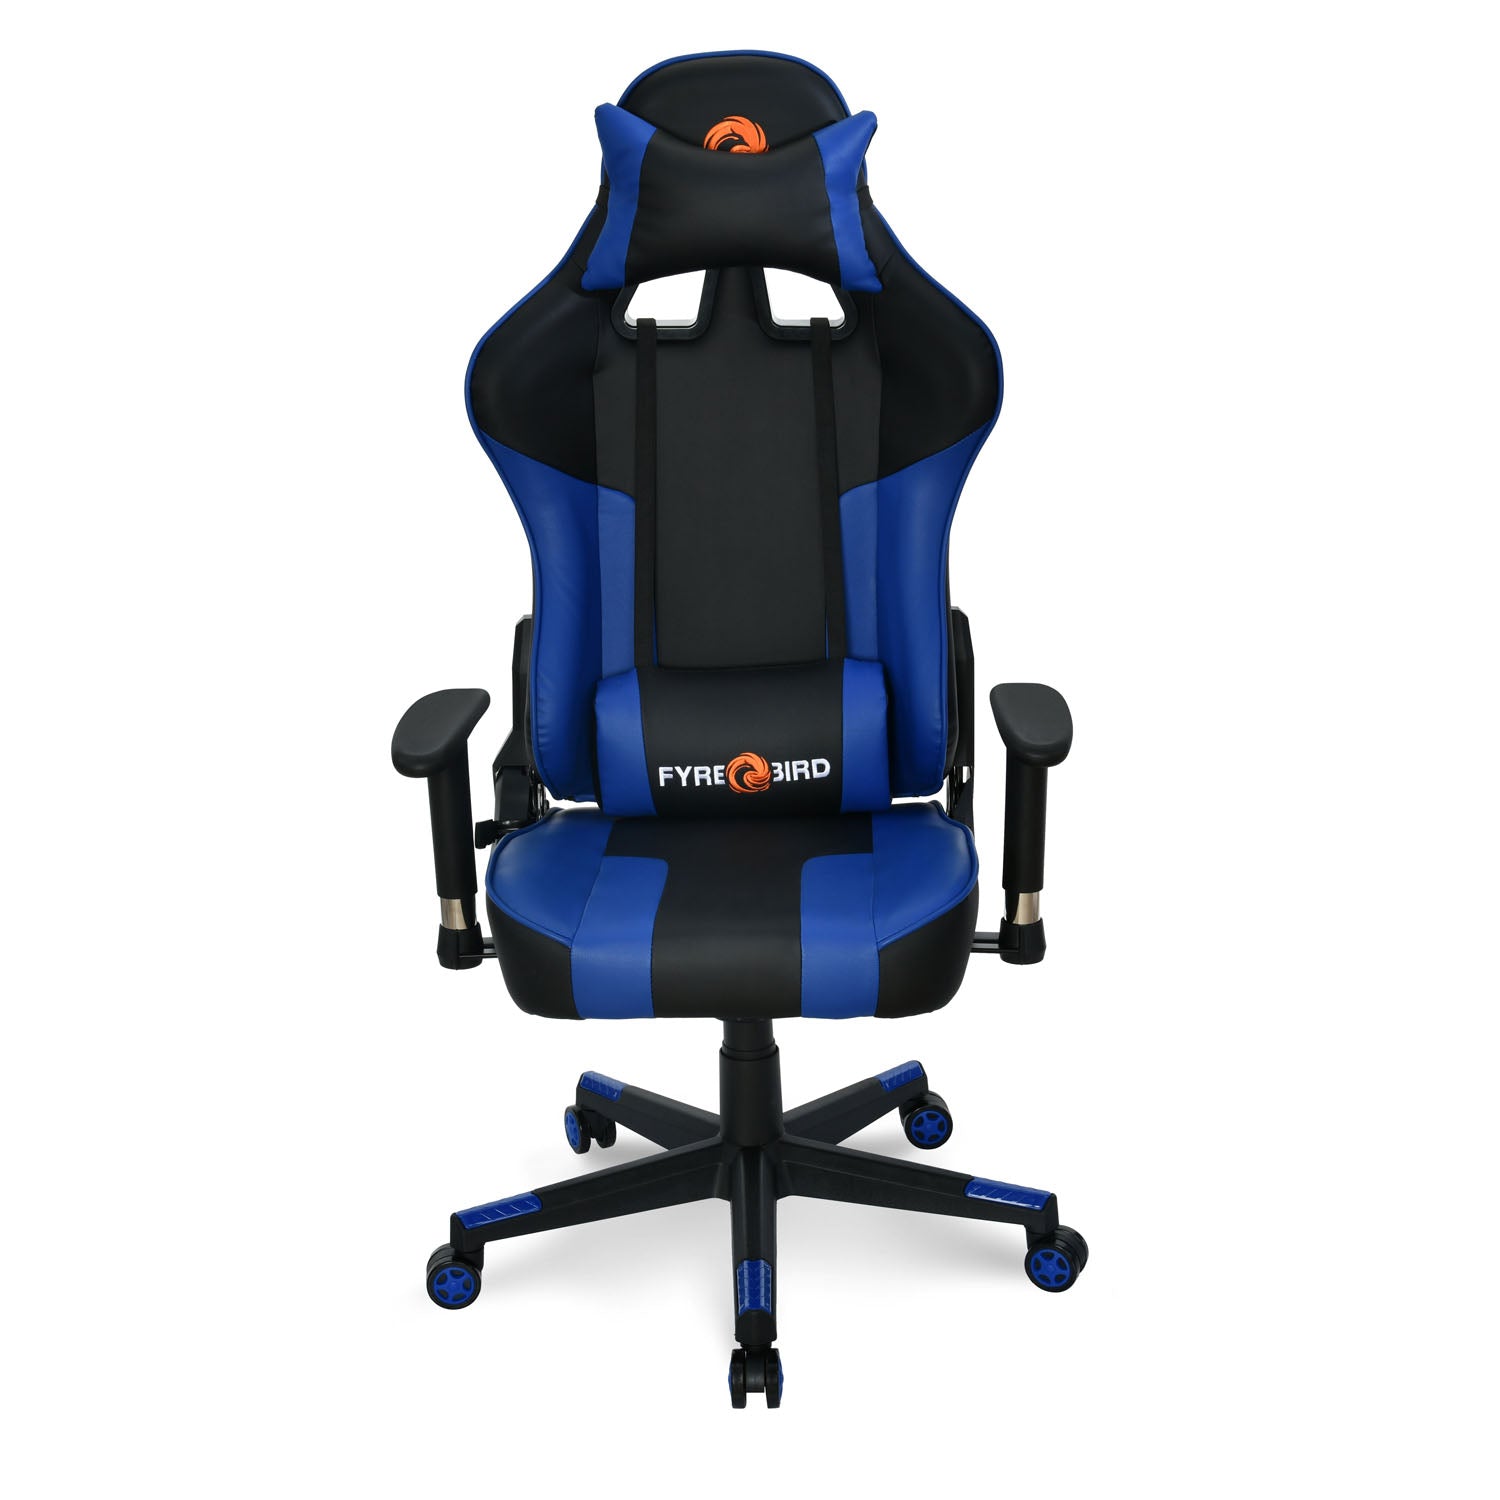 Bosco Leatherette Ergonomic Gaming Chair with Neck & Lumbar Pillow (Black & Blue)